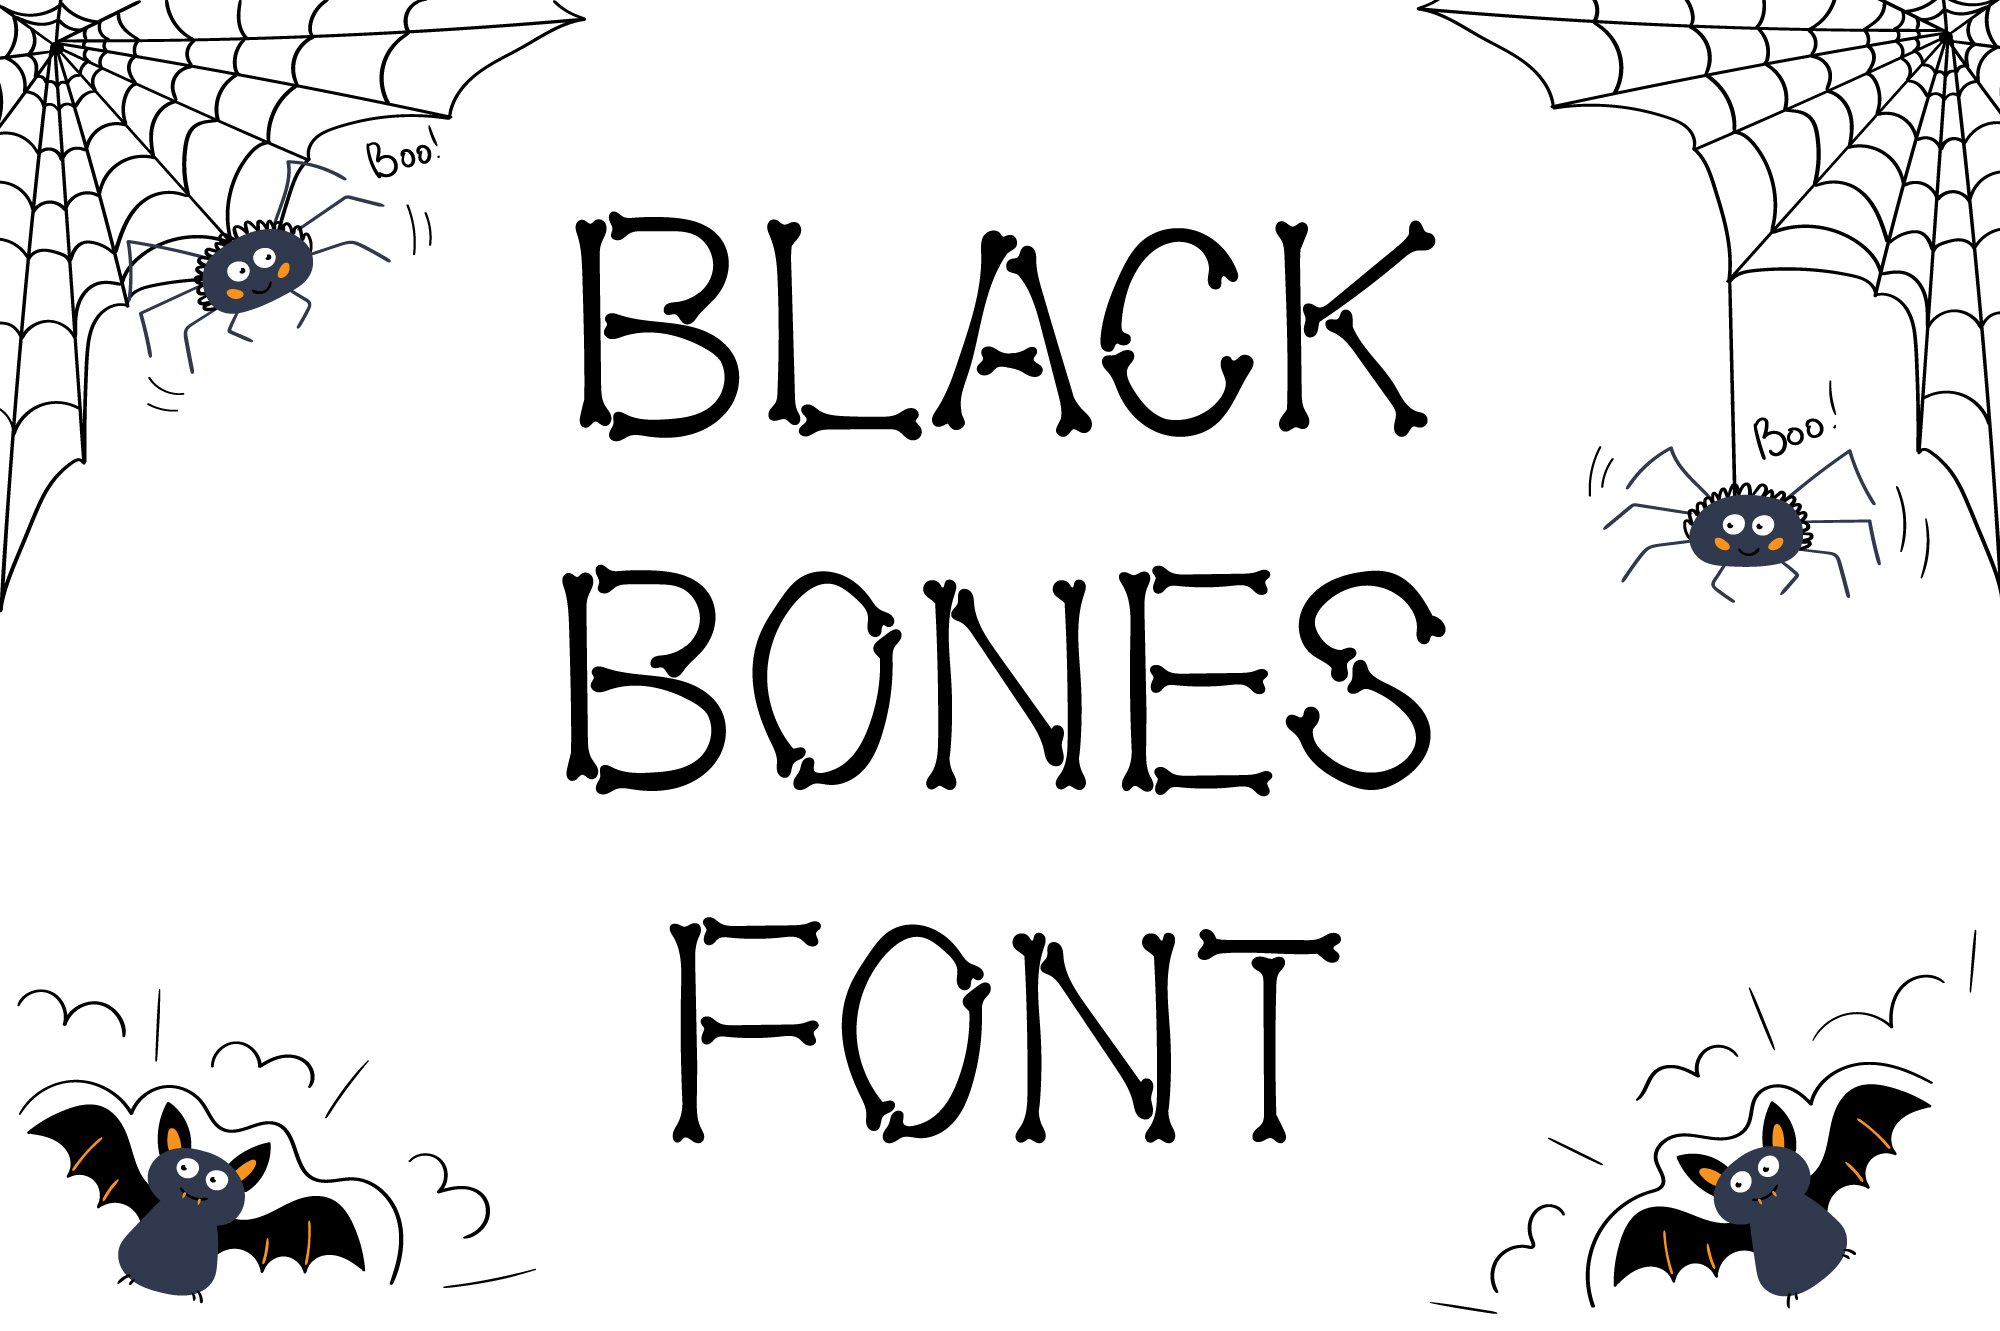 Black Bones Halloween Font cover image.